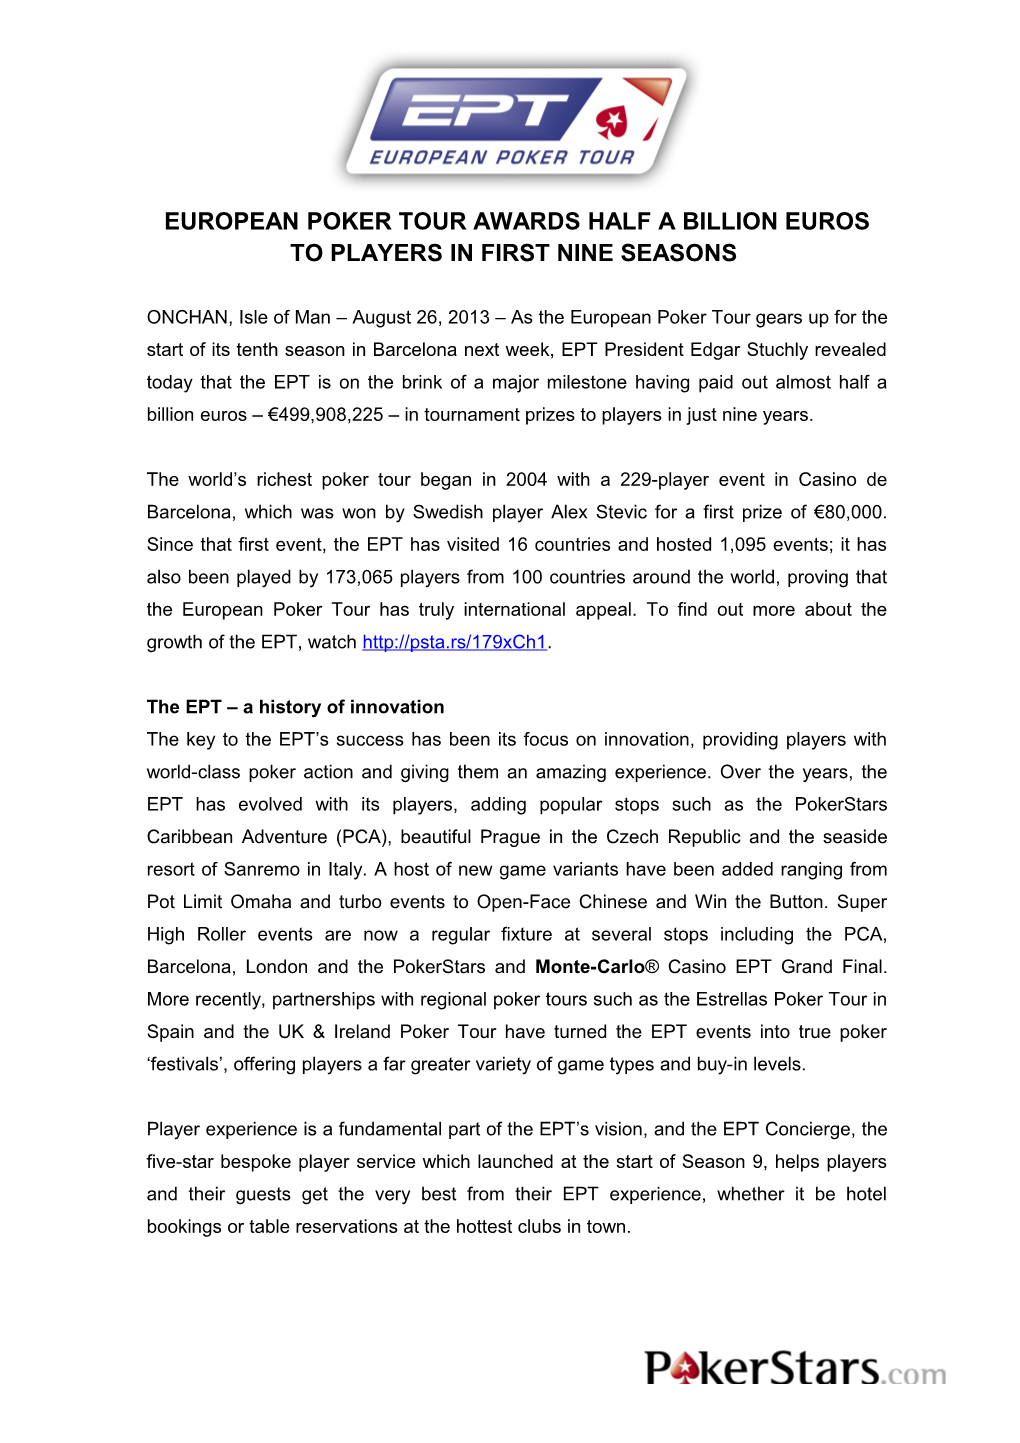 European Poker Tour Awards Half a Billion Euros to Players in First Nine Seasons